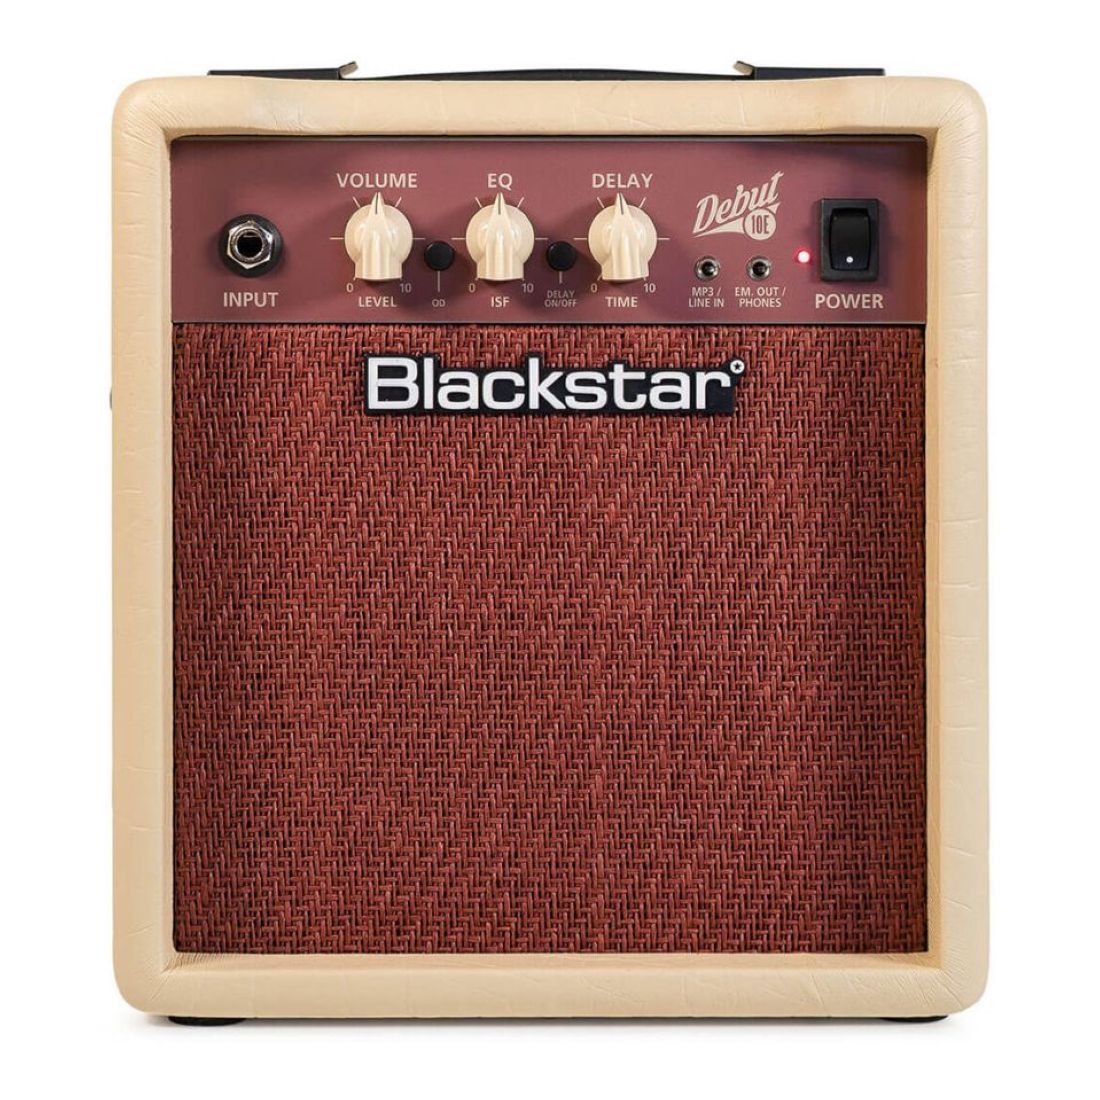 Blackstar Debut-10E Stereo Practice Guitar Amplifier - Beige